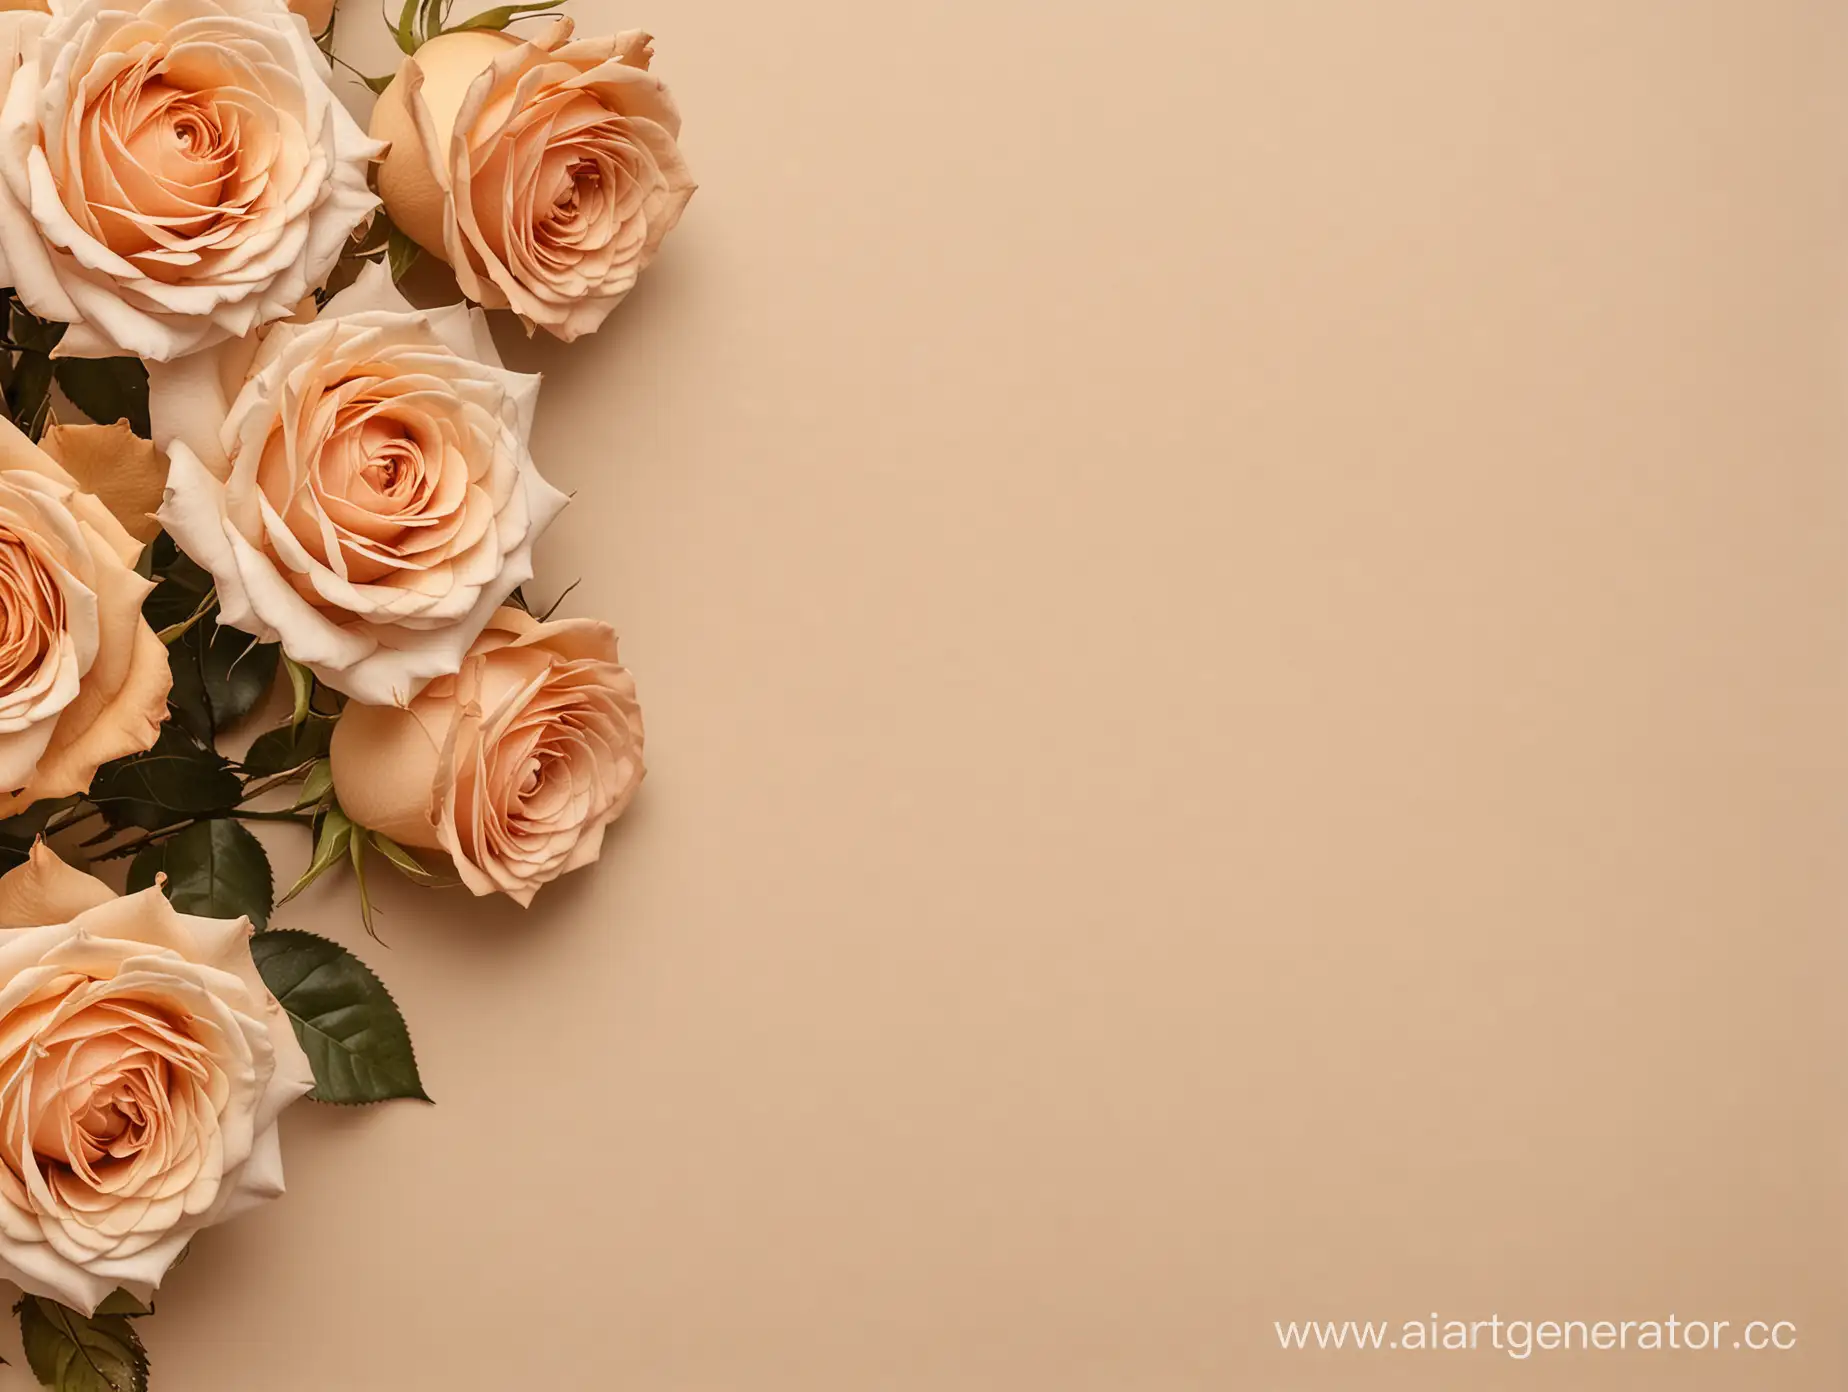 Beige-Roses-Arrangement-in-Lower-Right-Corner-on-Beige-Background